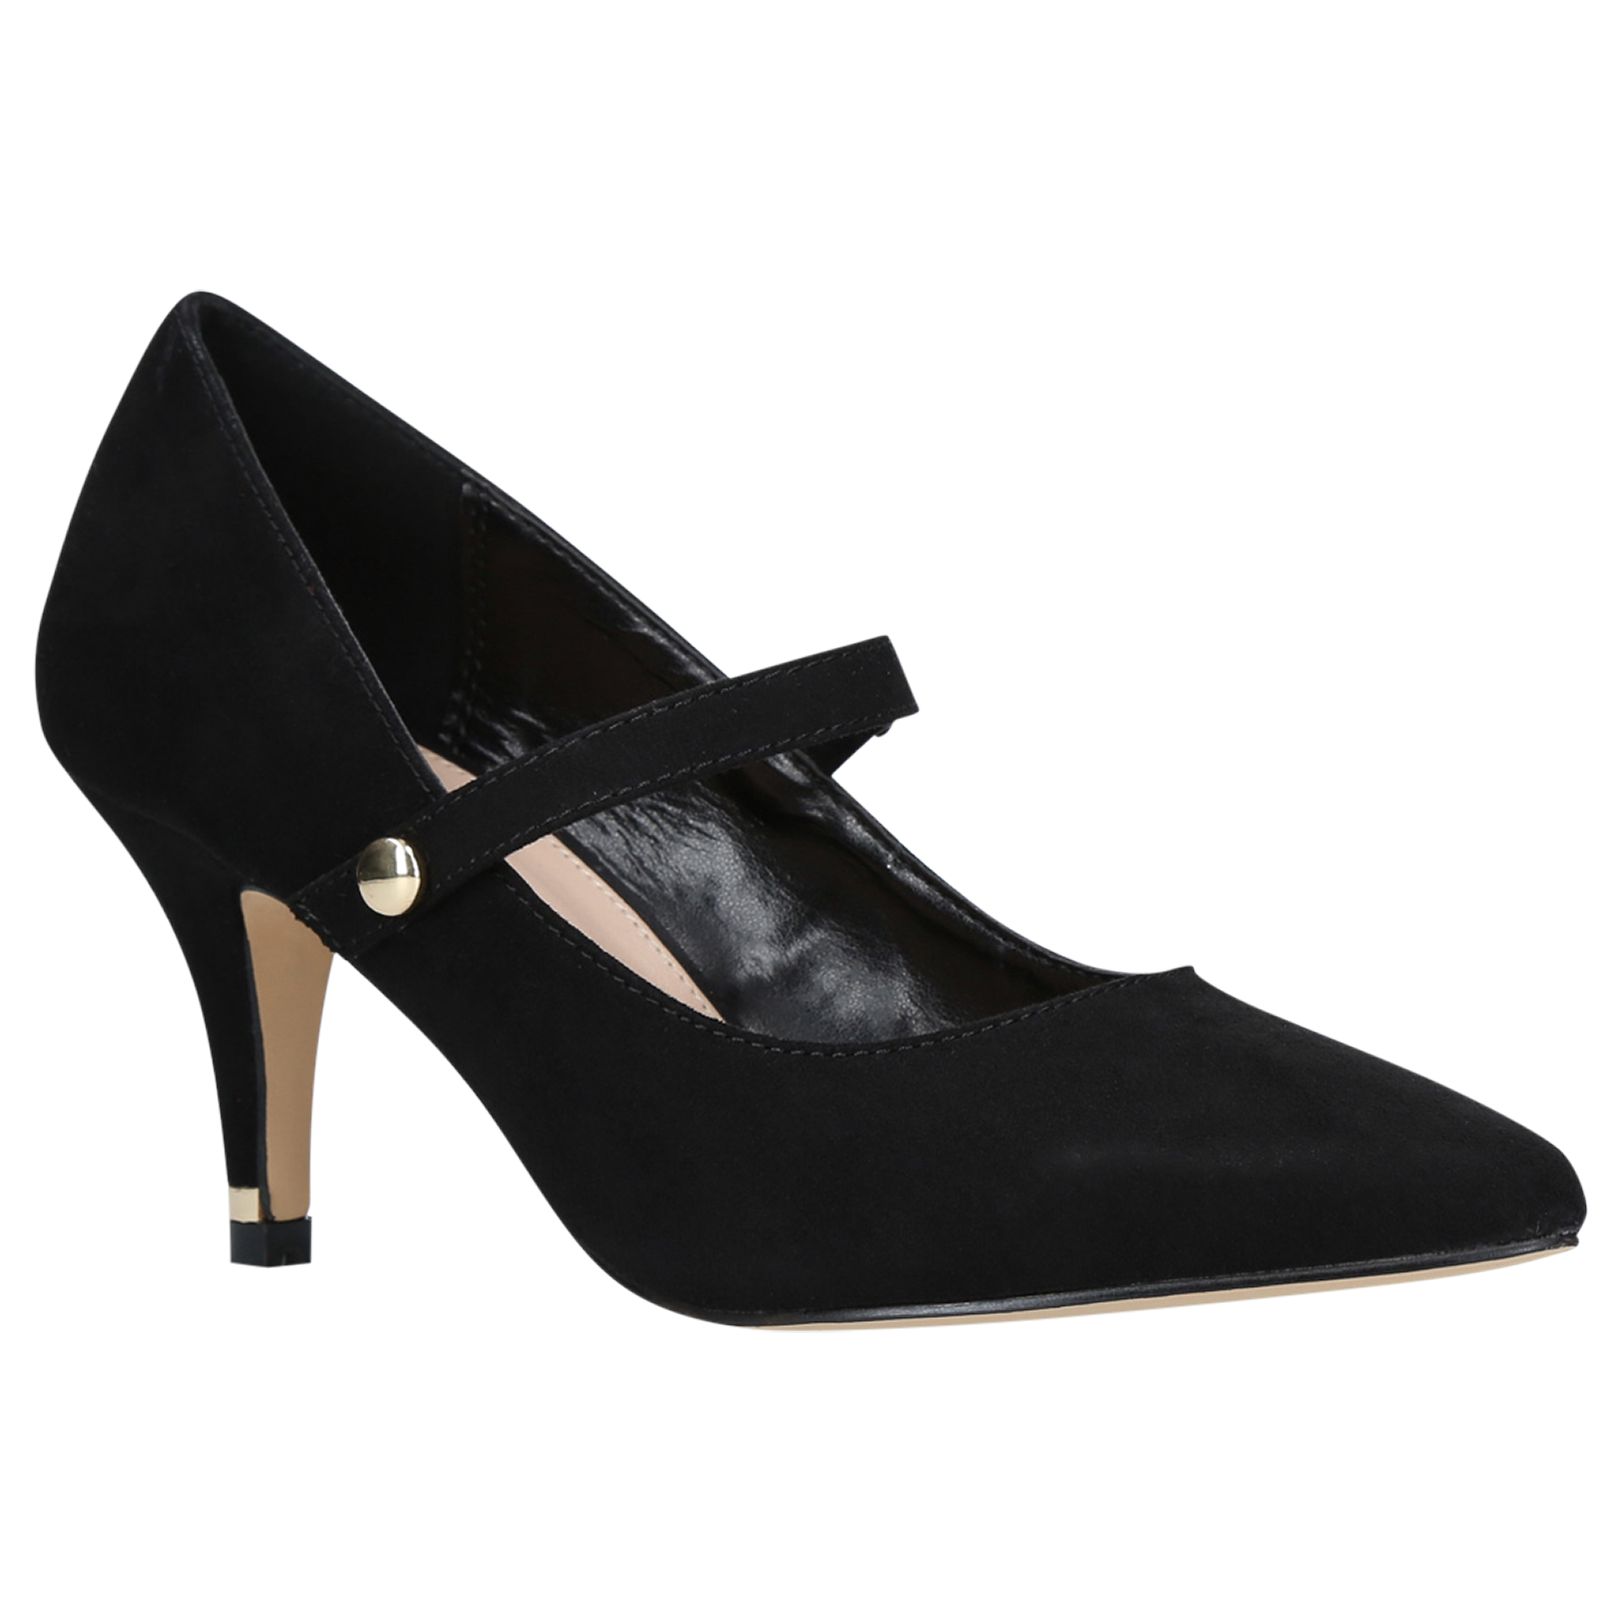 Carvela Kream Court Shoes, Black, 6